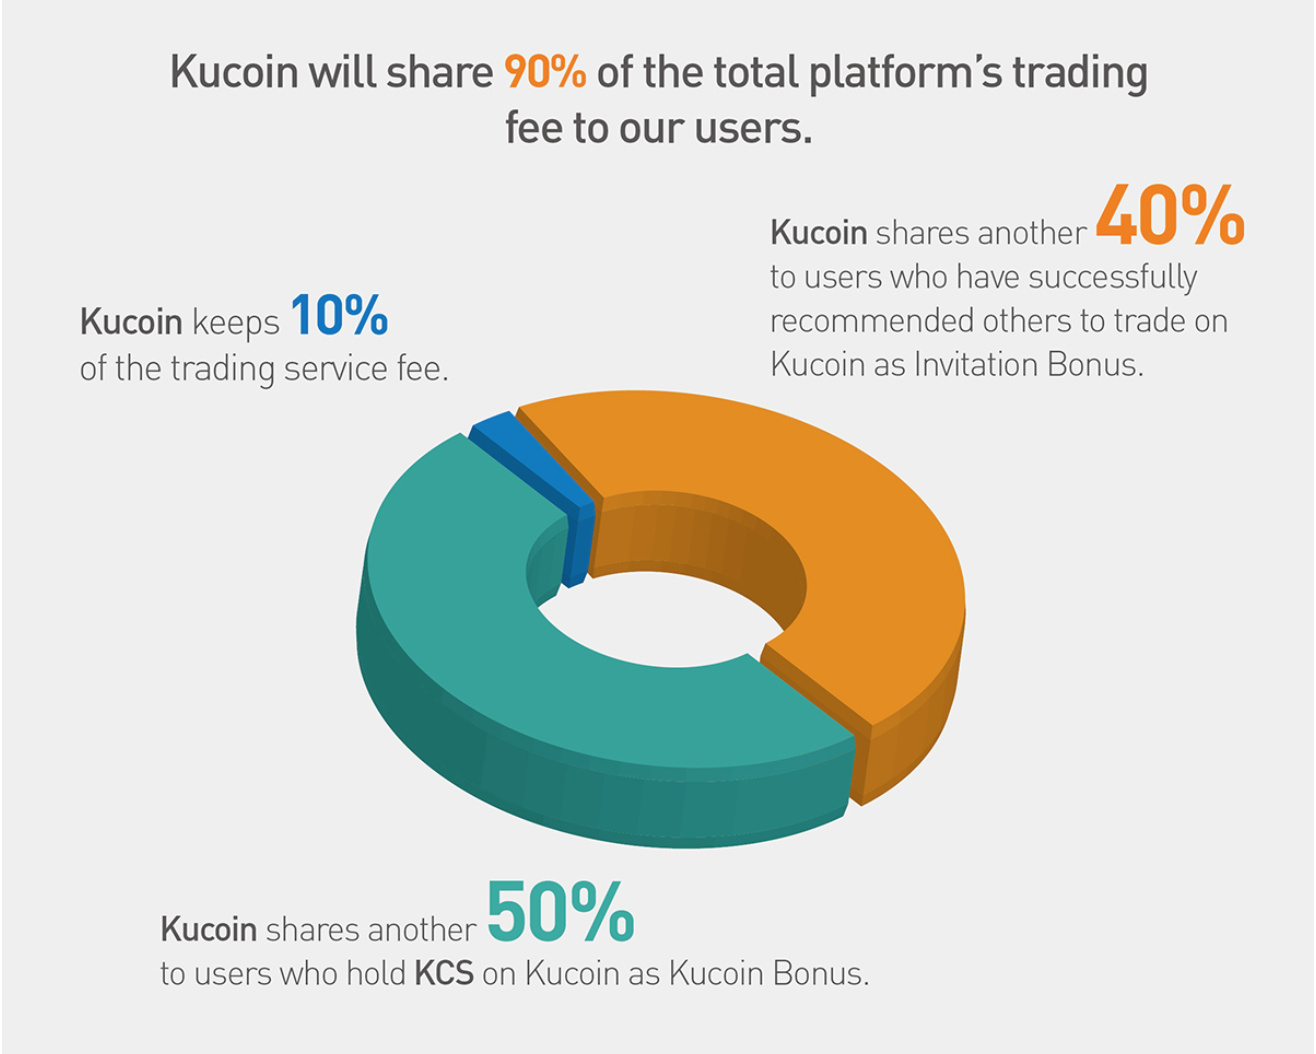 explain kucoin shares